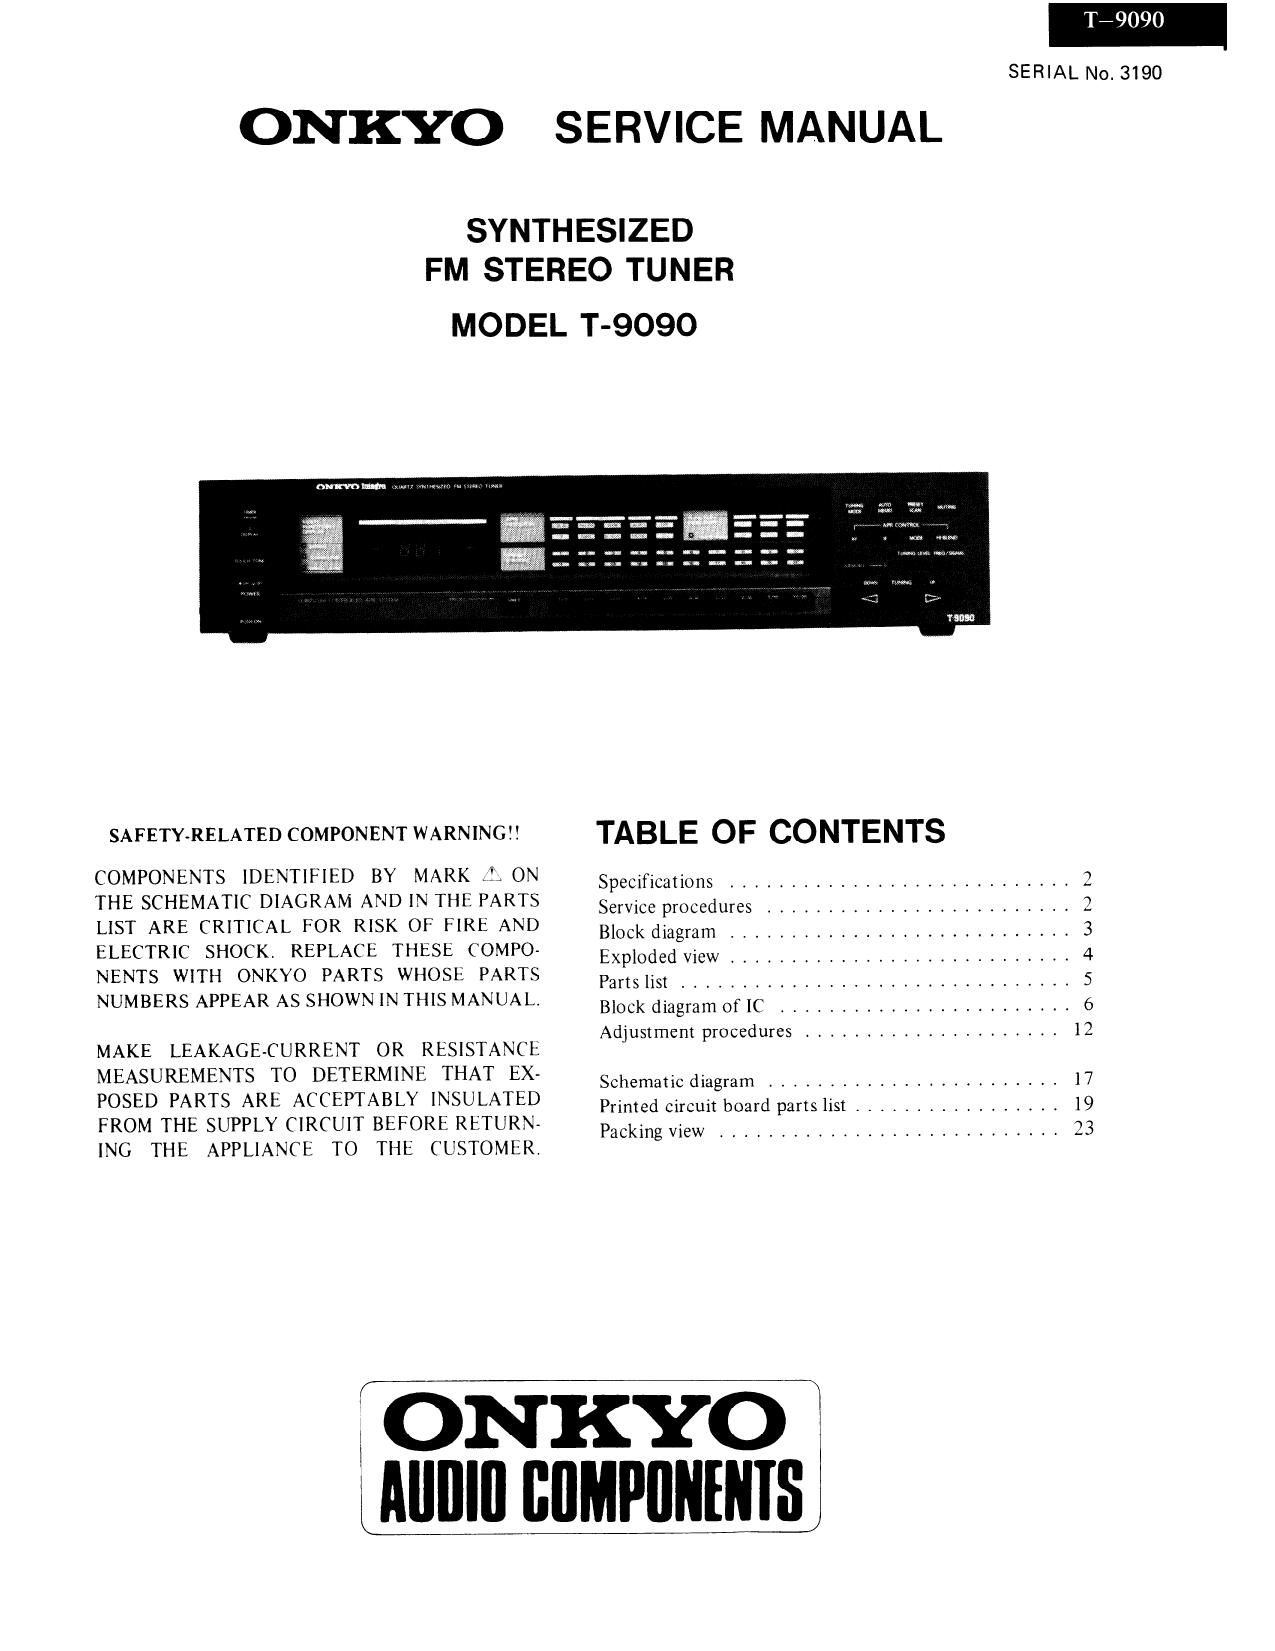 Onkyo T 9090 Service Manual